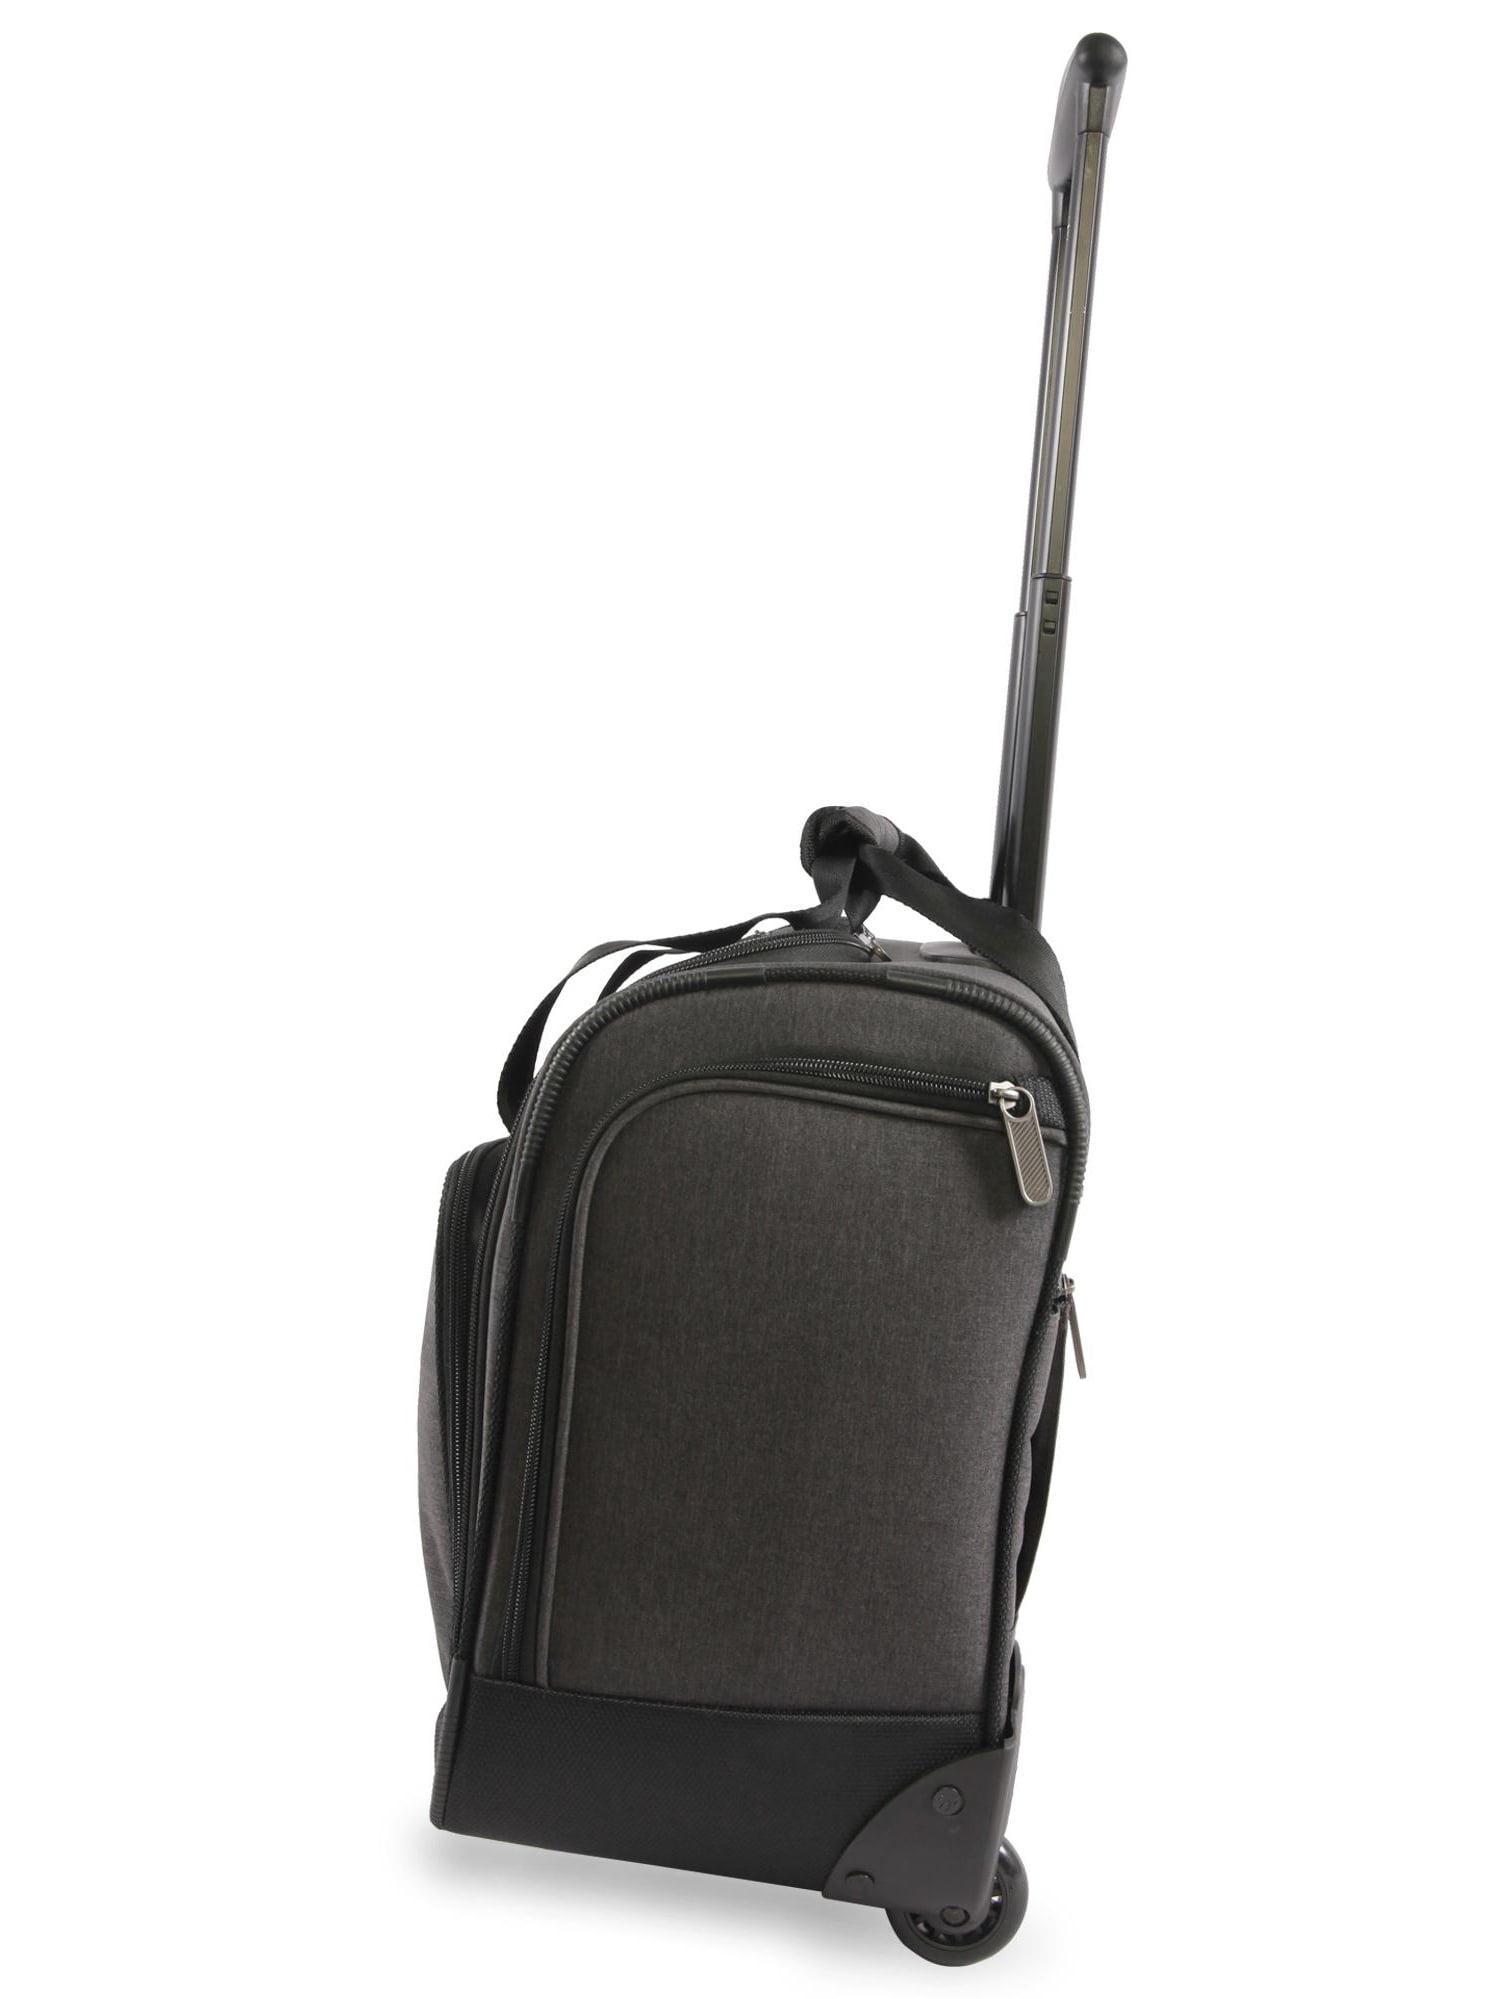 Black ORIGINAL PENGUIN Wheeled Under The Seat Carry On Bag-16 